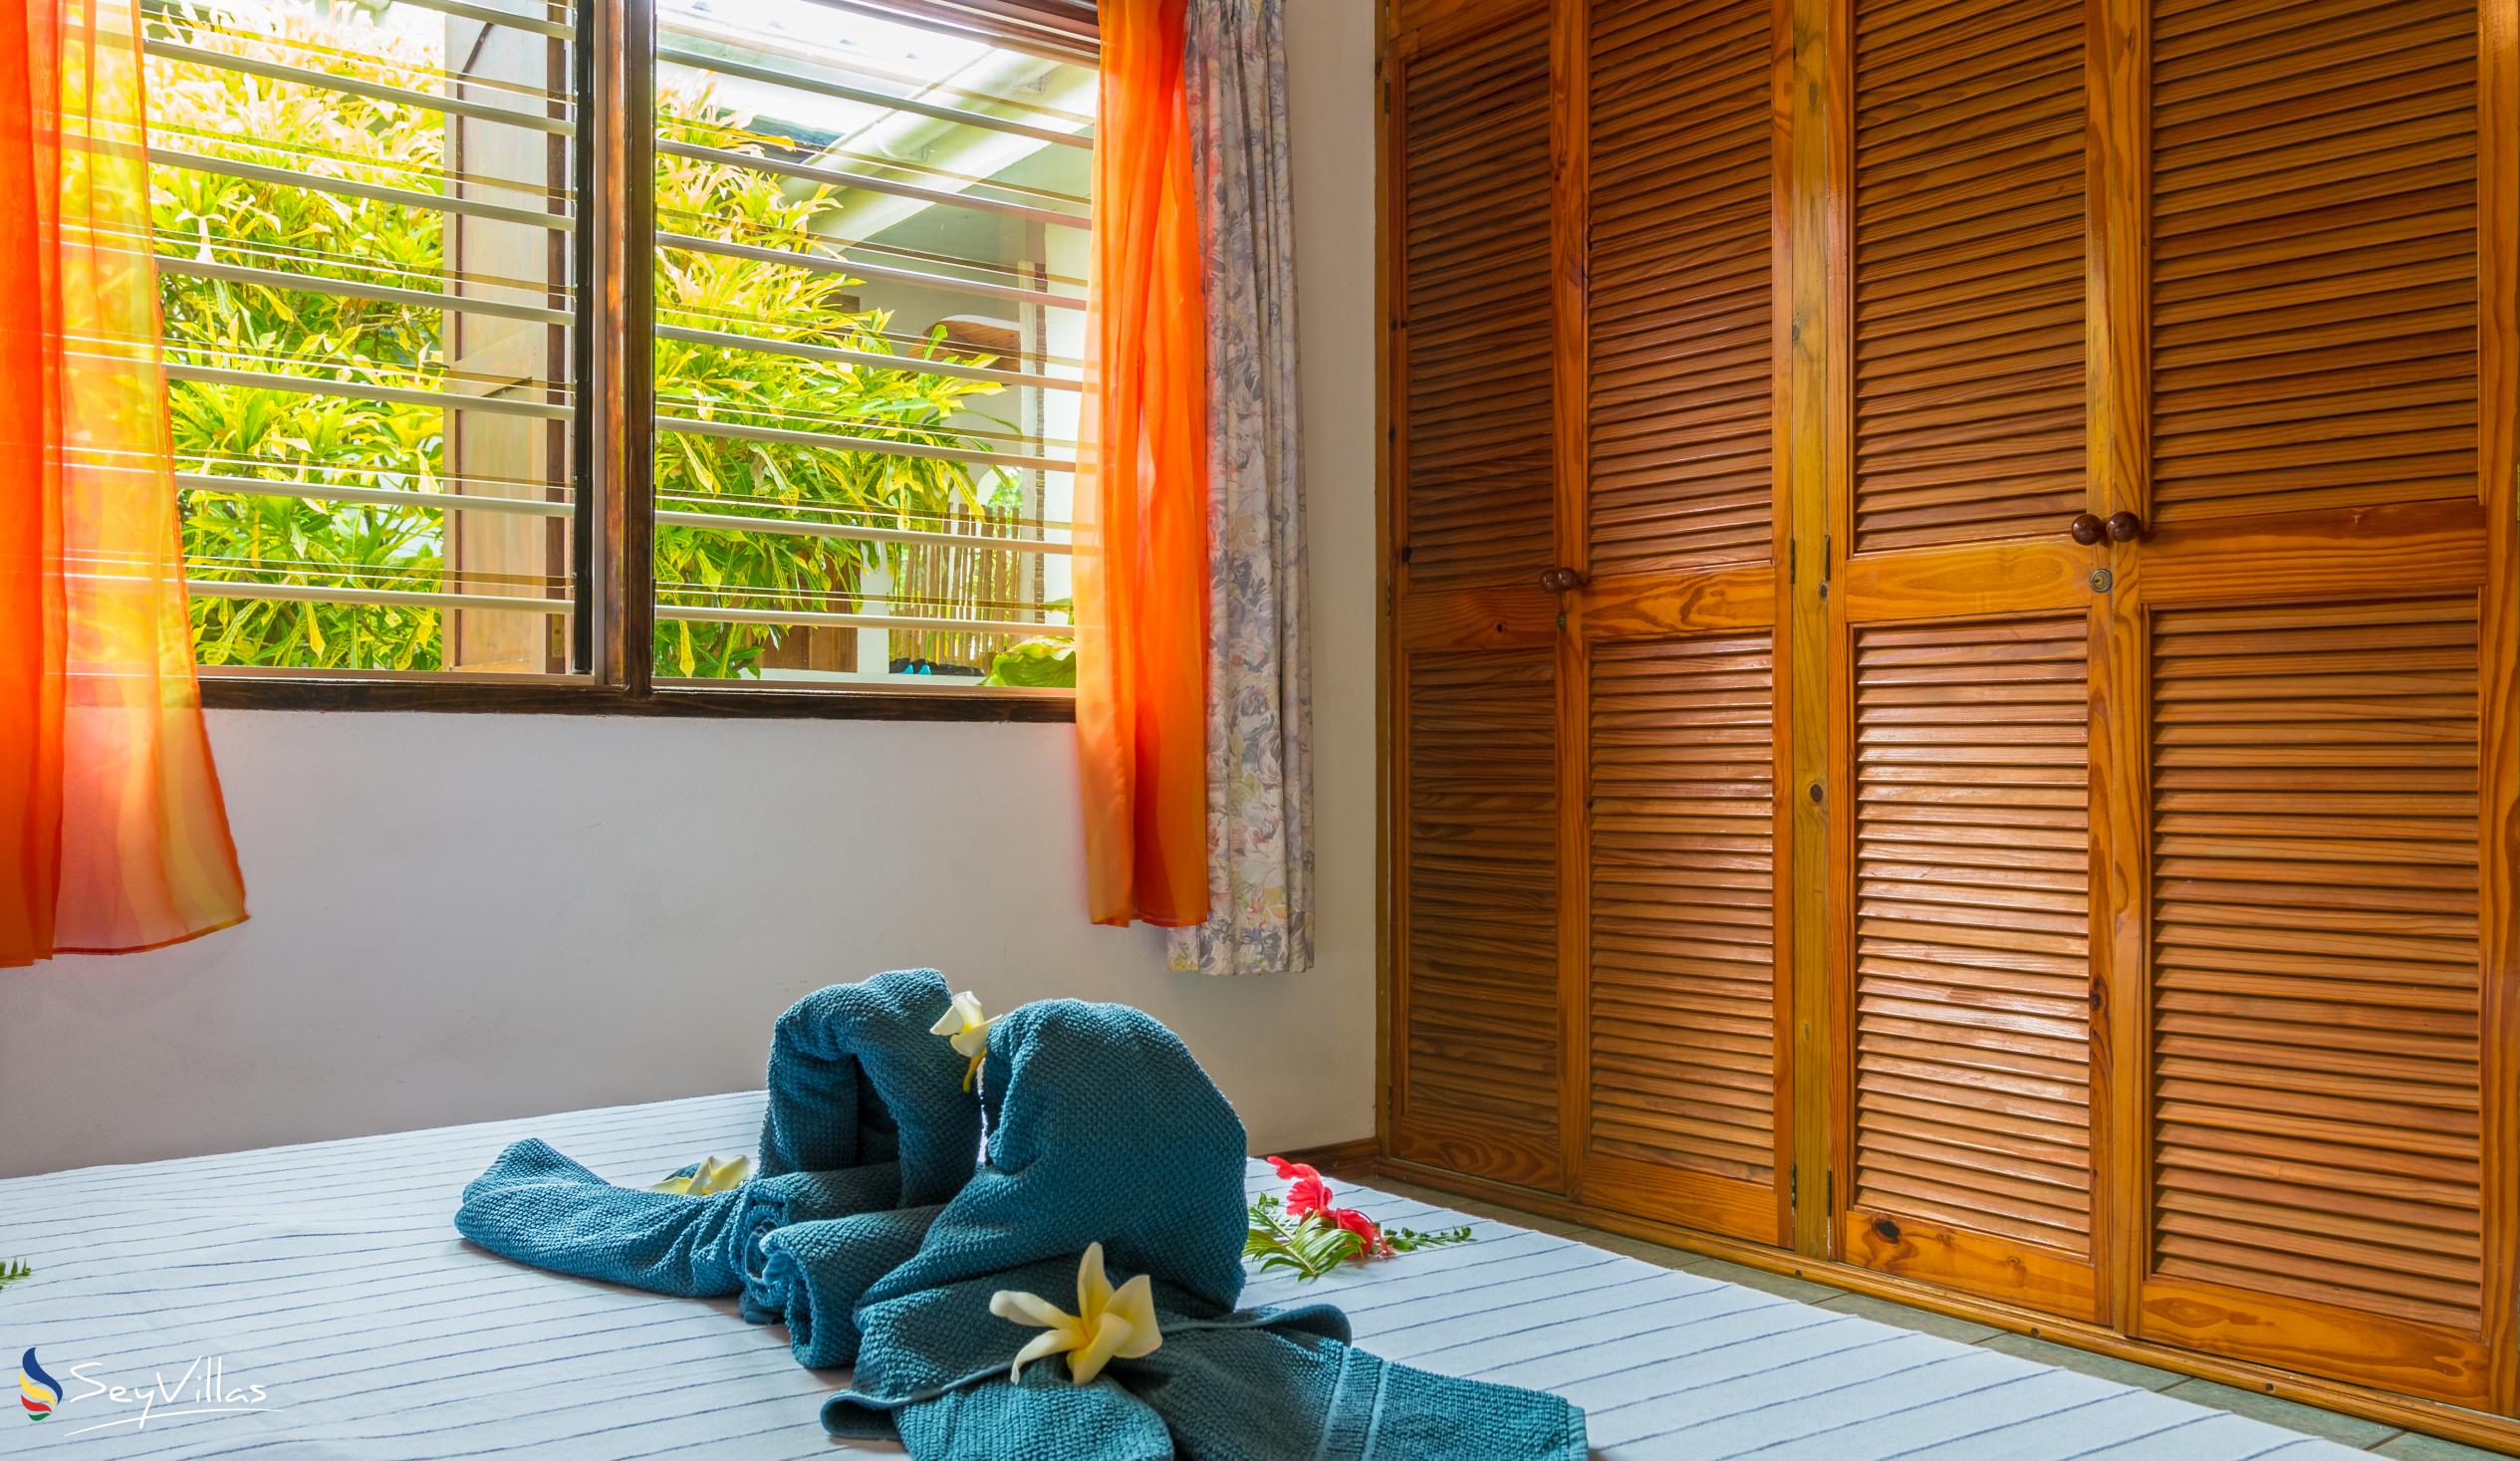 Photo 71: Beau Bamboo - House Contoret - Mahé (Seychelles)